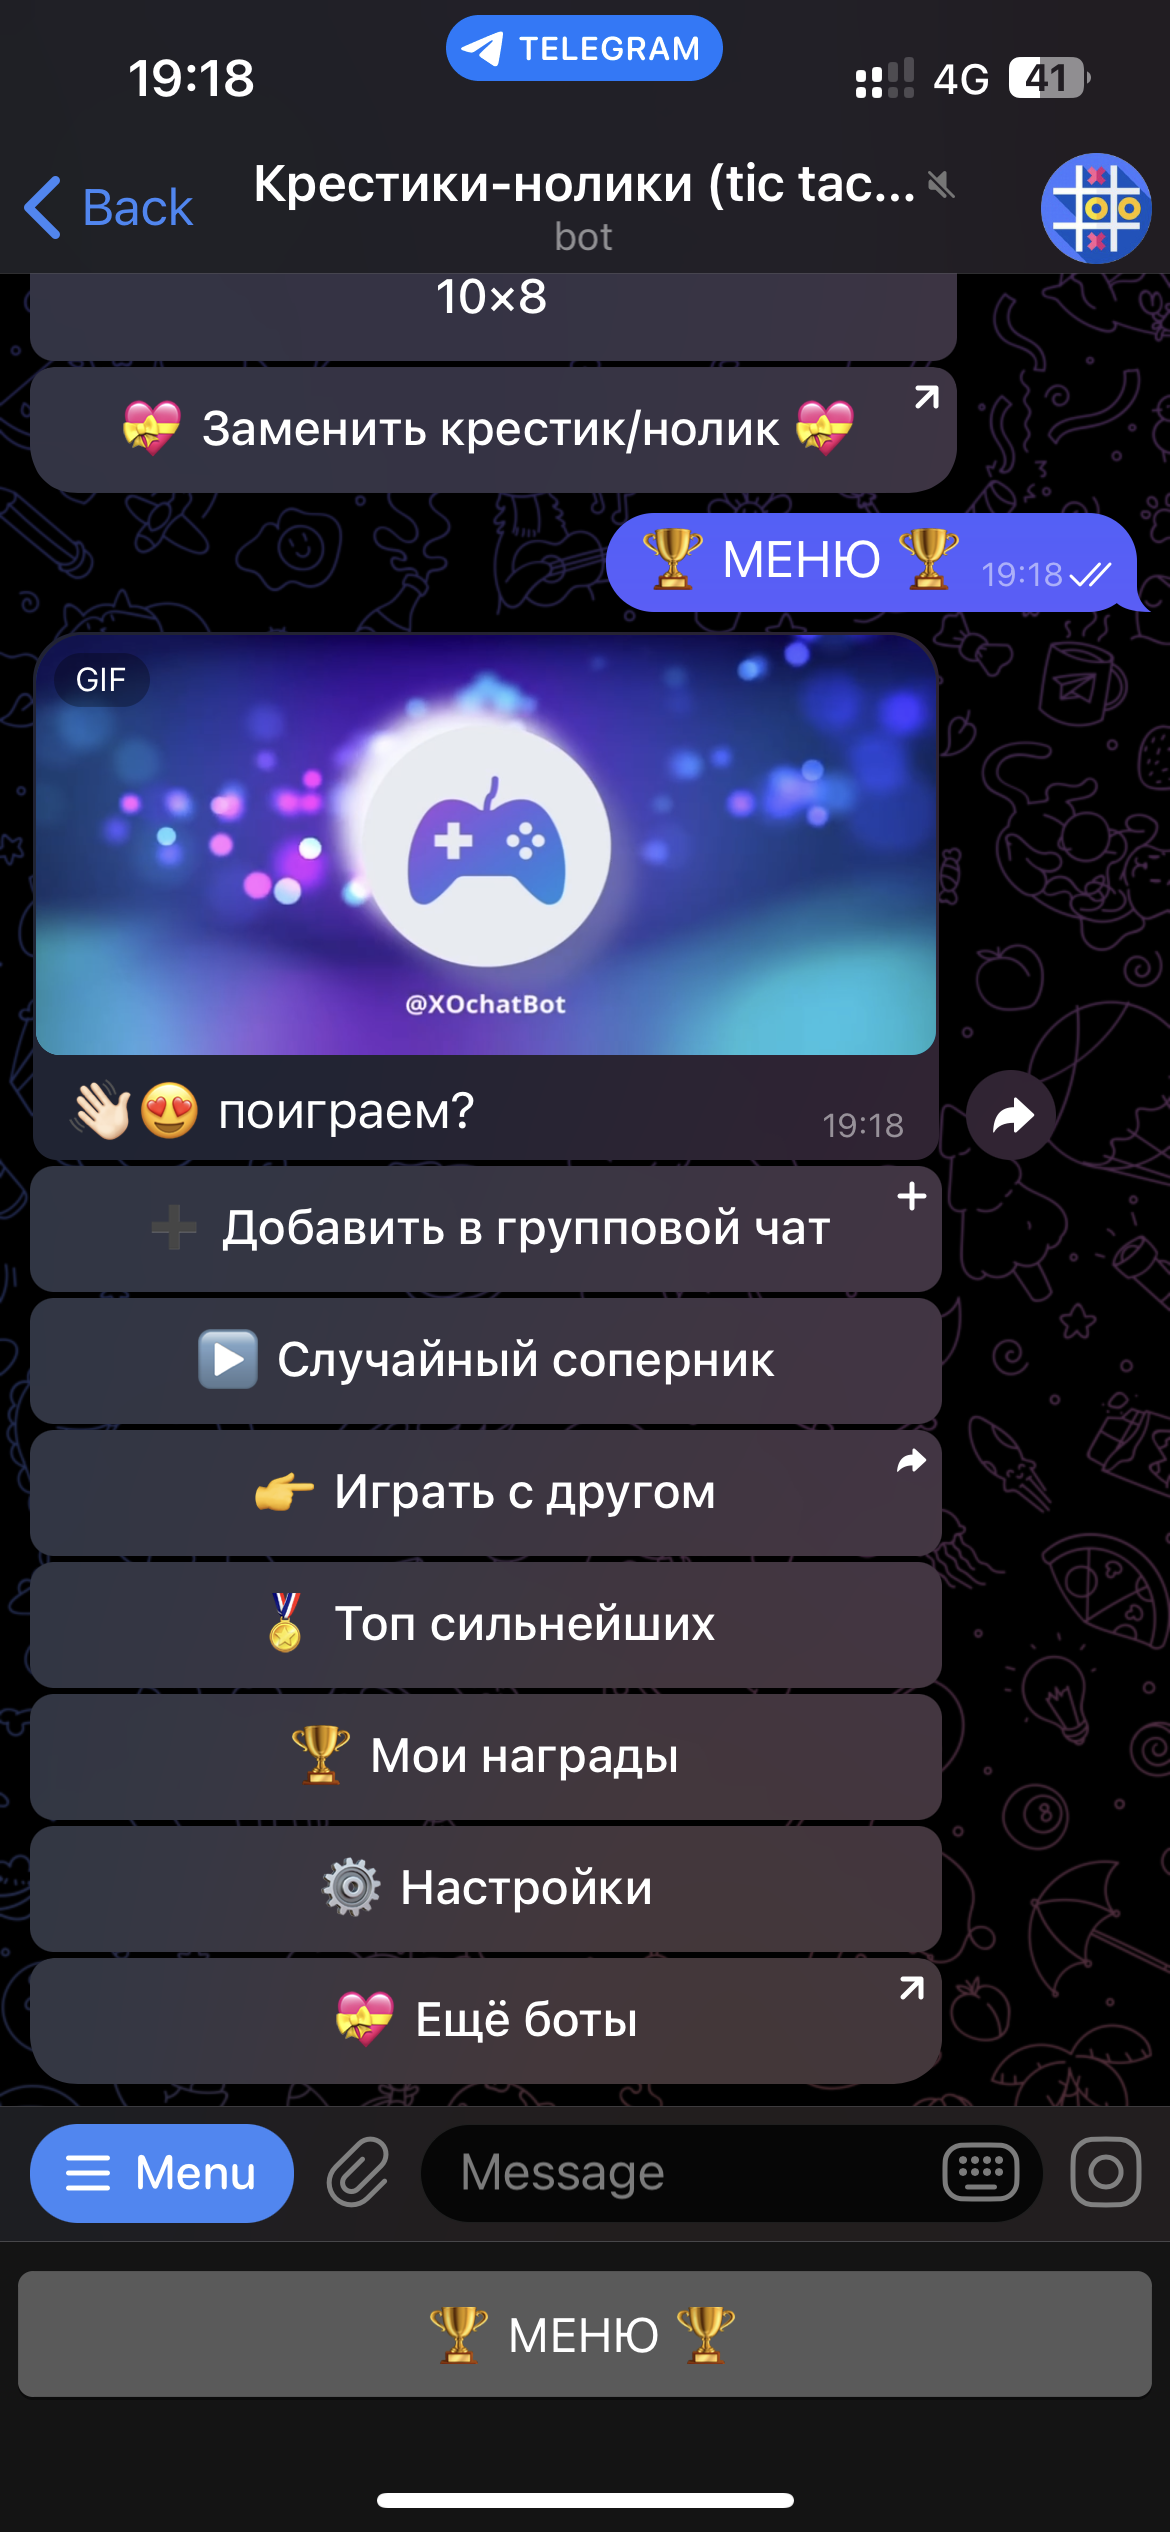 XOchatBot - крестики-нолики в Телеграм